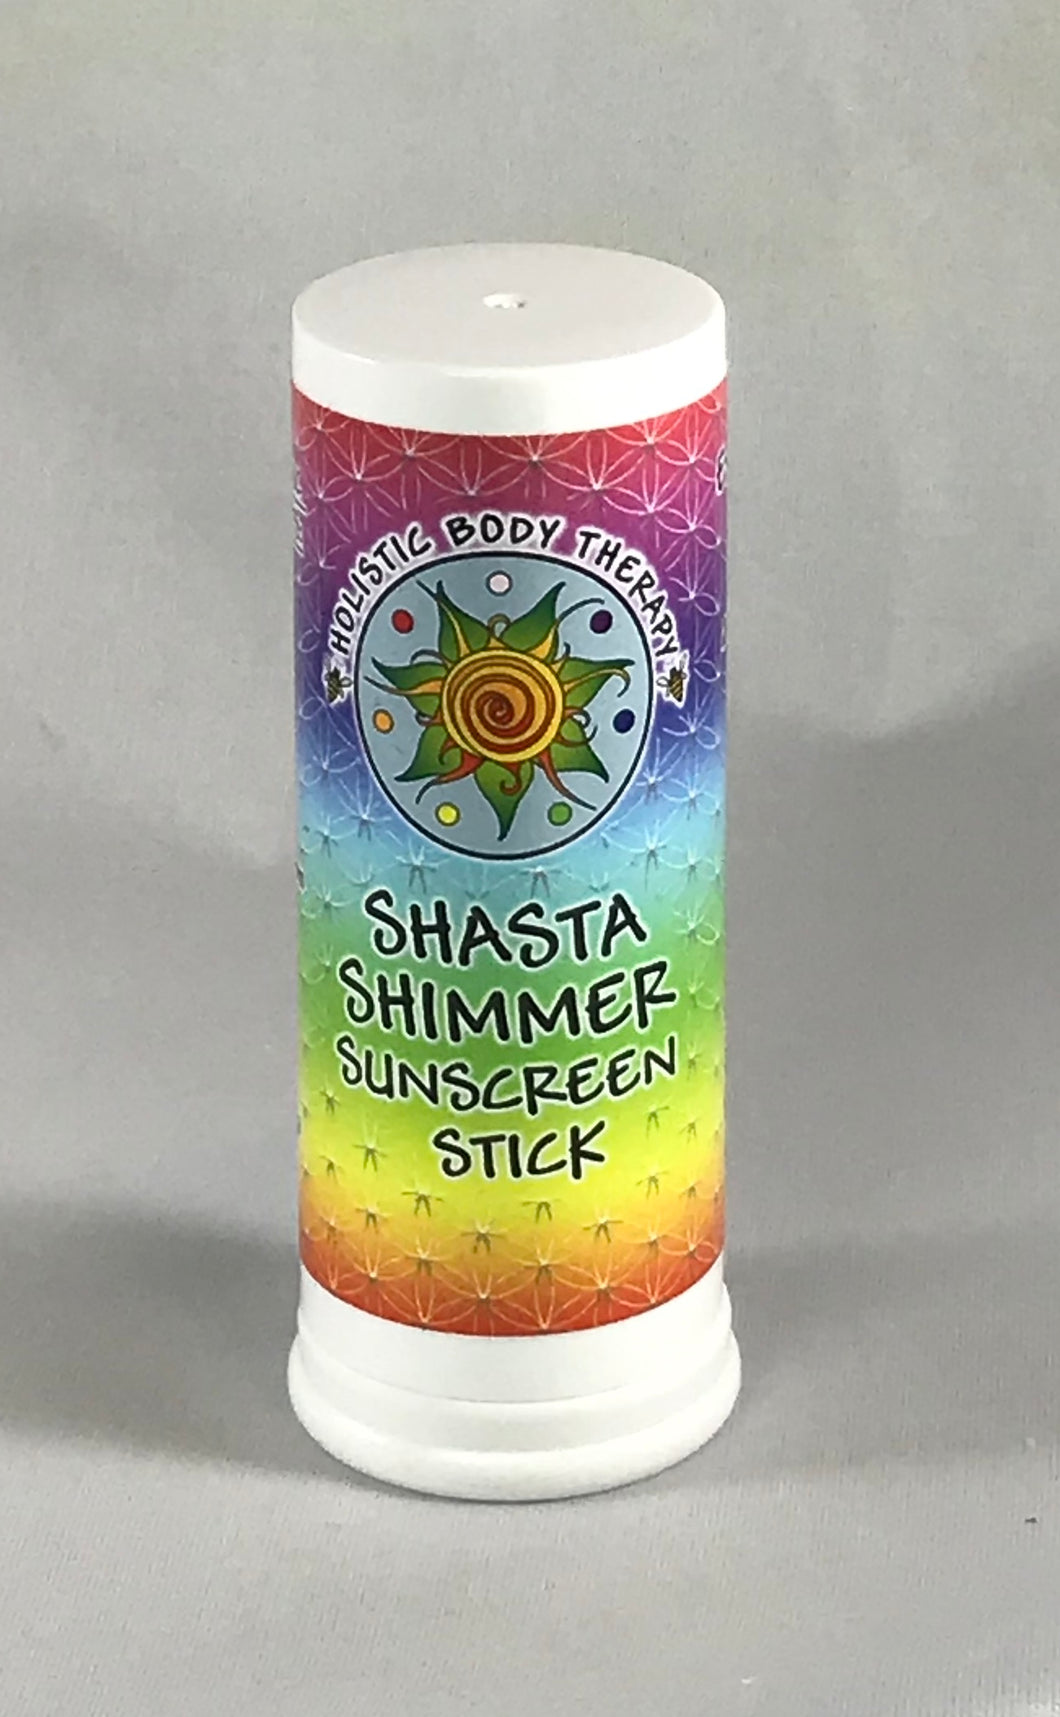 Shasta Shimmer Sunscreen Stick